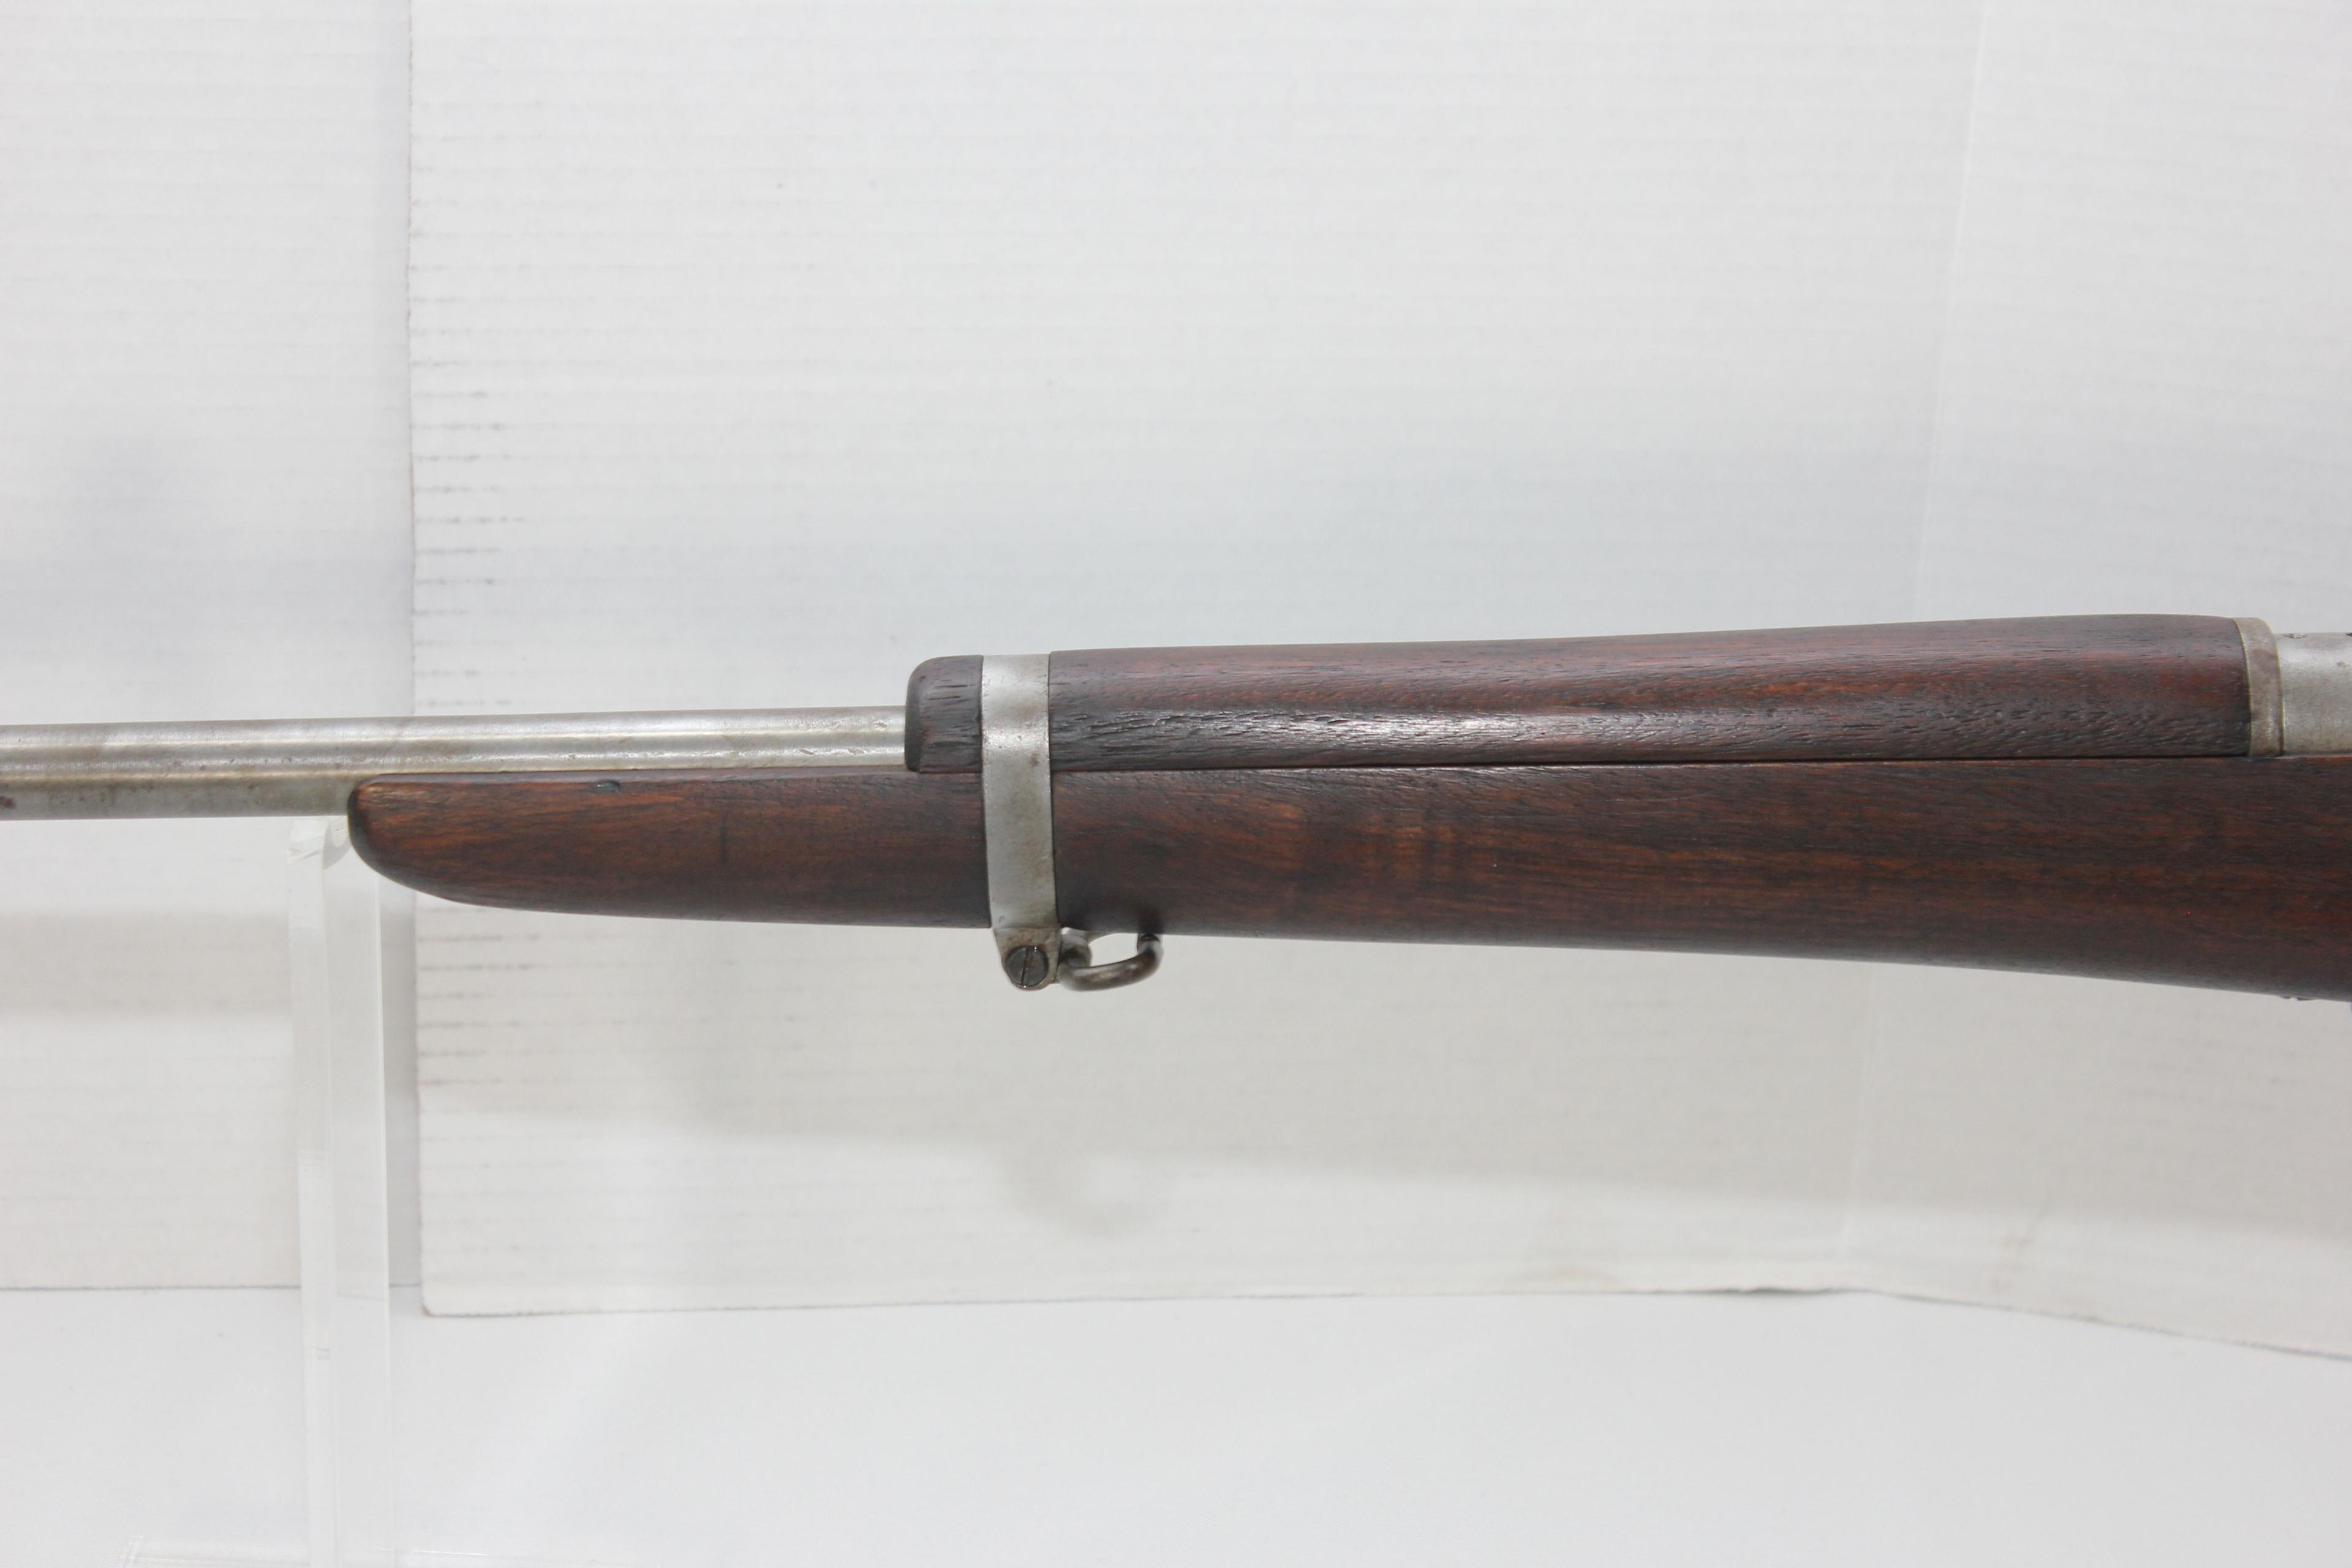 Enfield No. 5 MK I .303 British Cal. Jungle Carbine w/20-1/2" BBL, Flash Hider, and Bayonet Lug; Dat